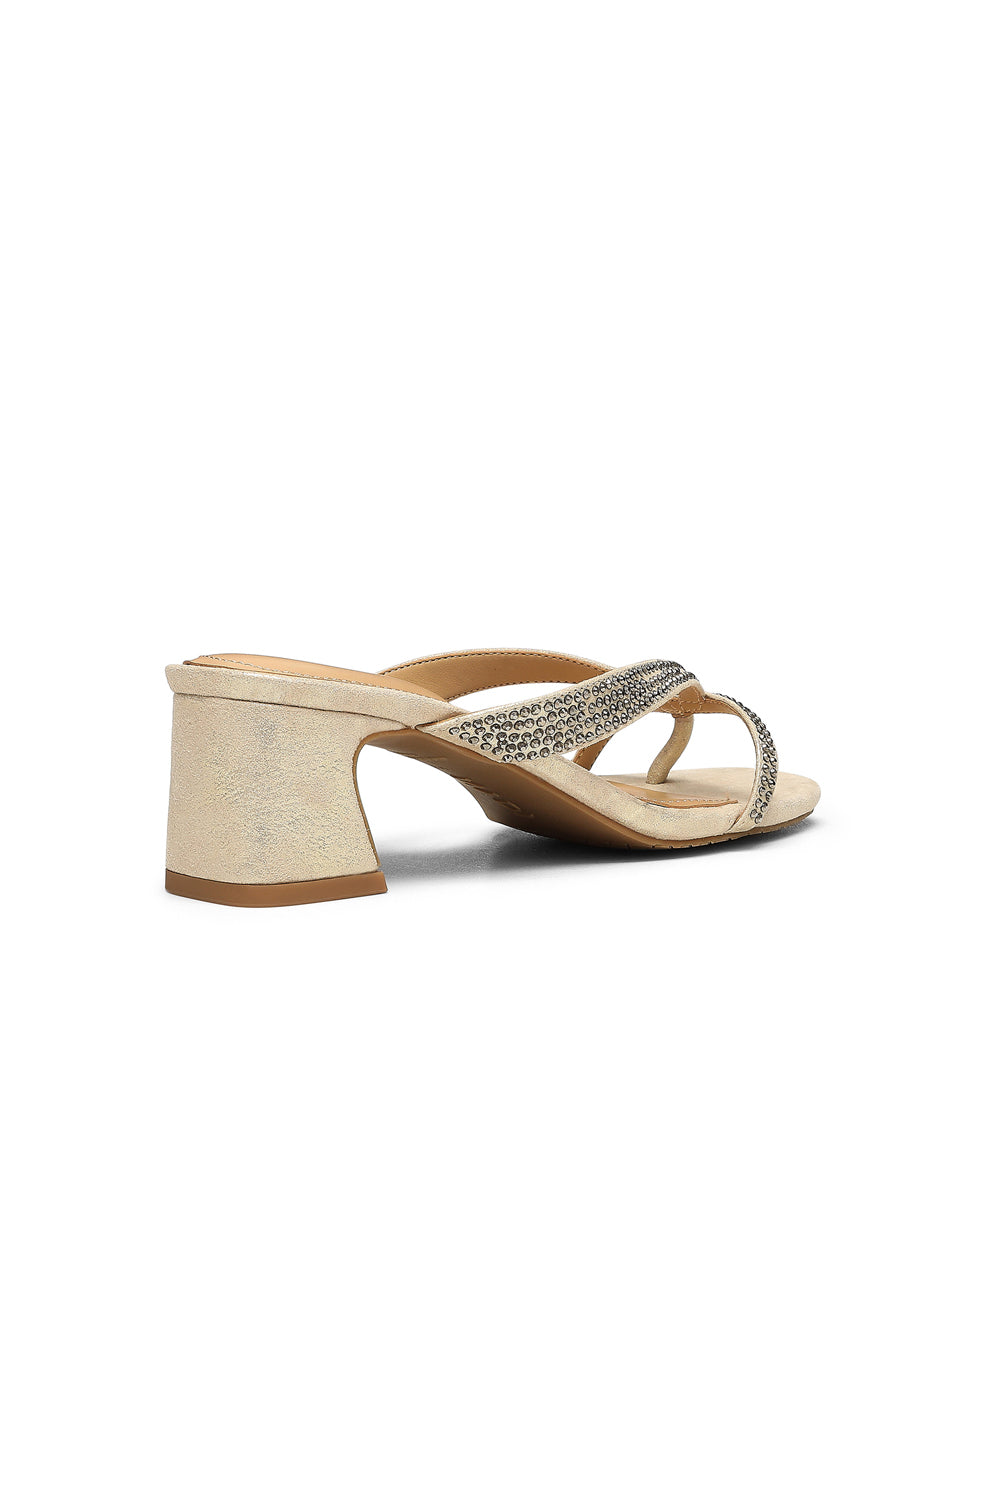 NYDJ Glynn Block Heel Sandals In Metallic Suede - Light Gold